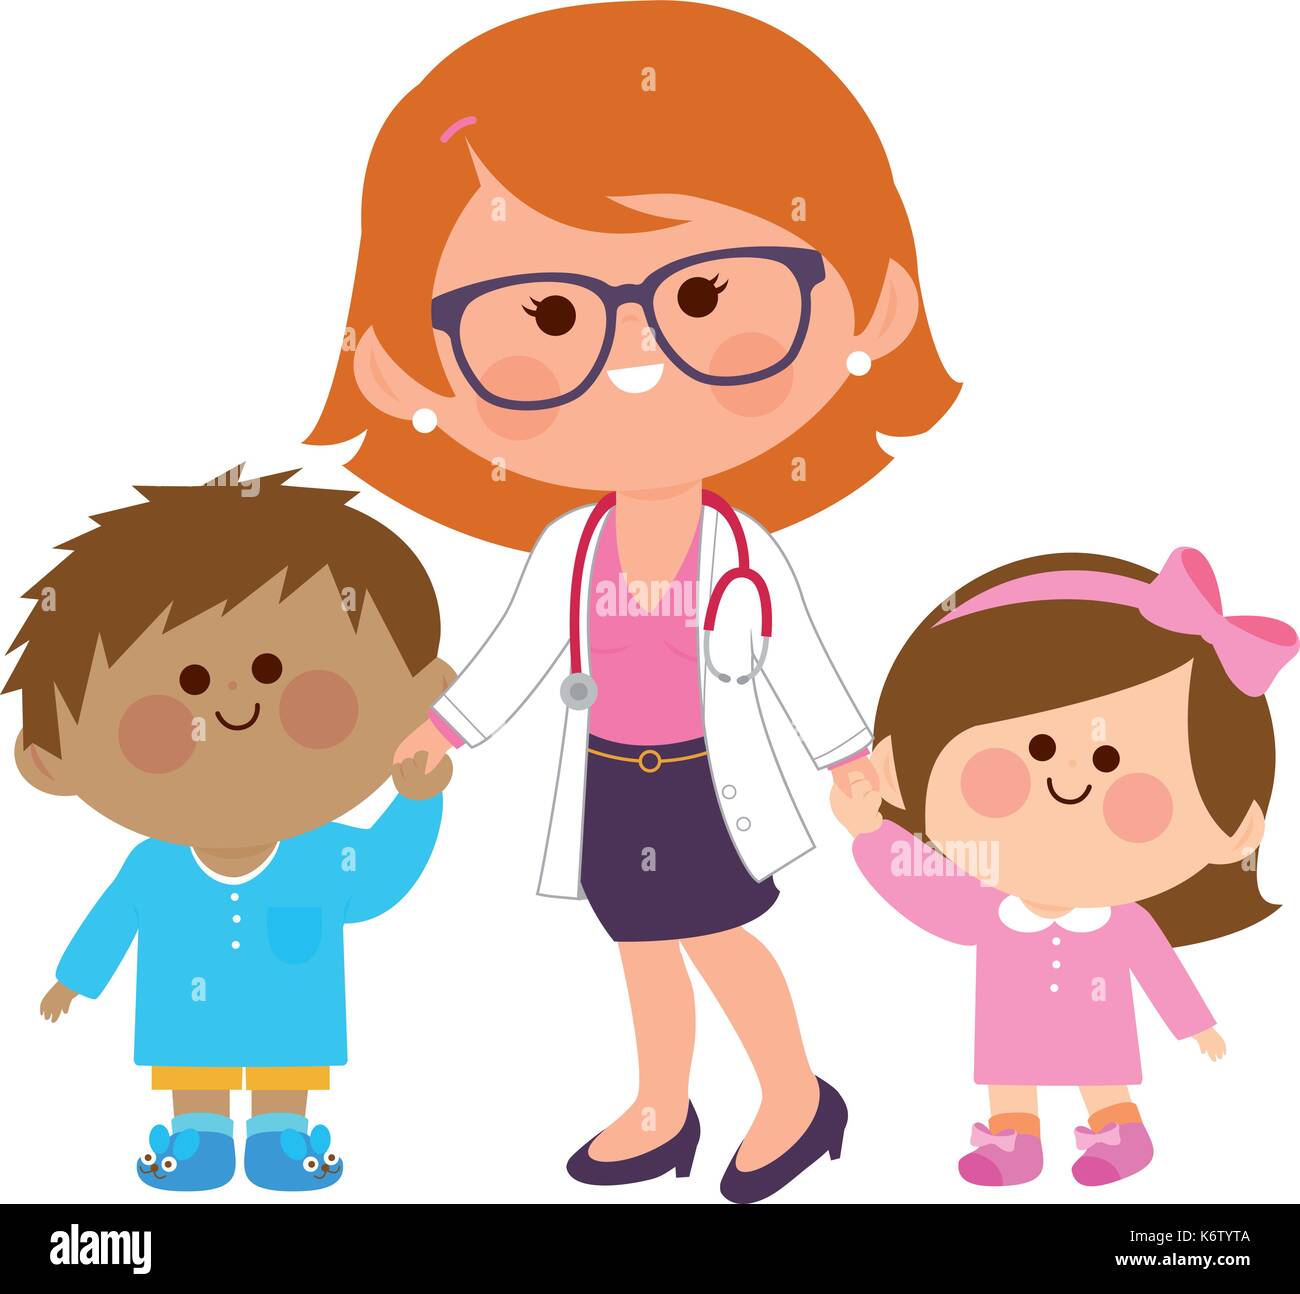 pediatric patients cartoon